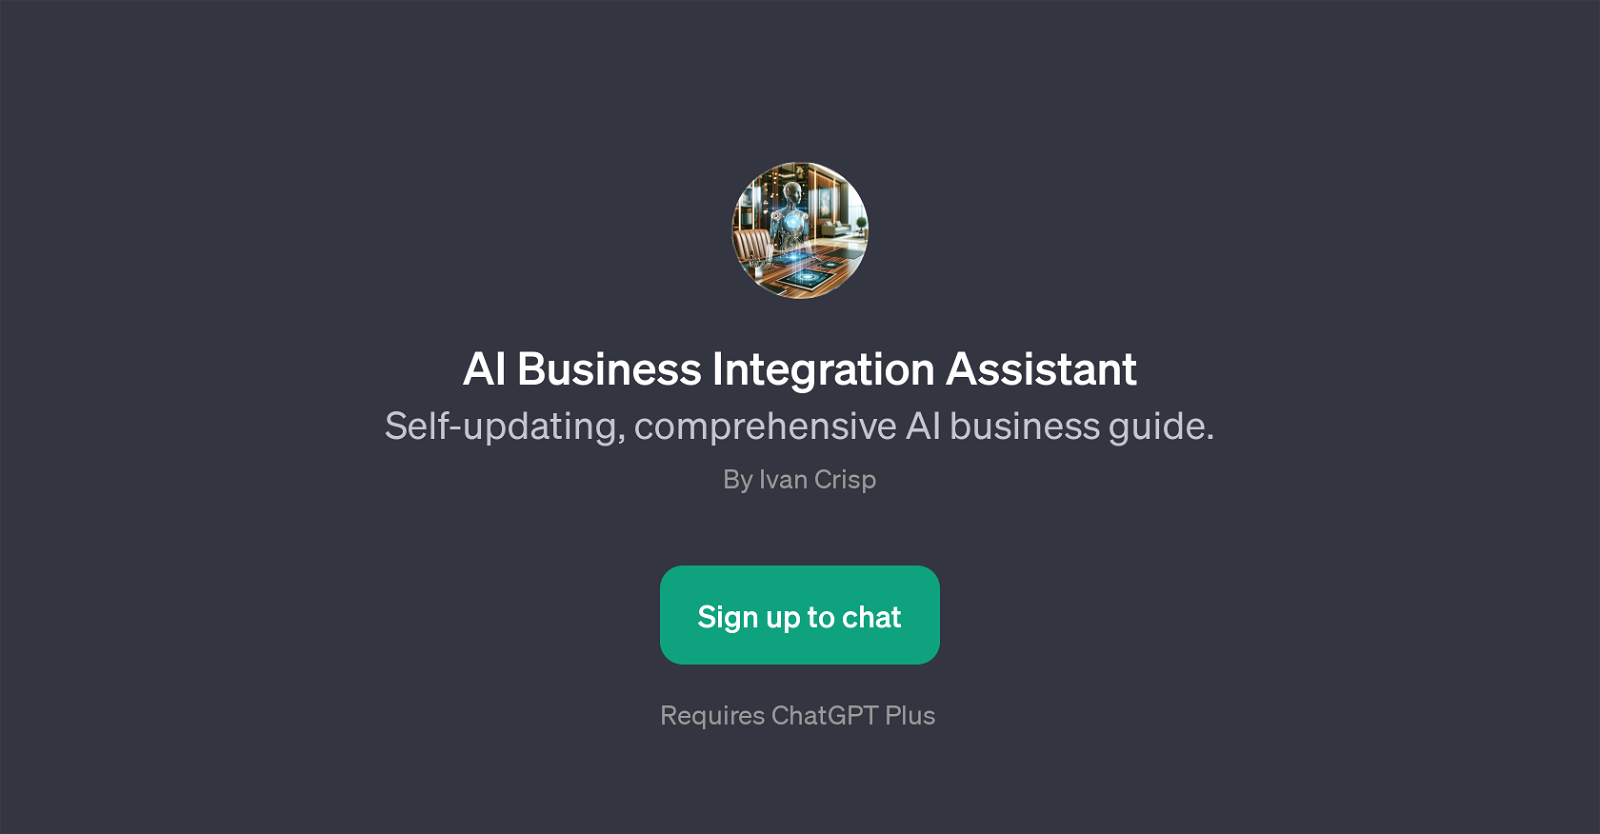 AI Business Integration Assistant website